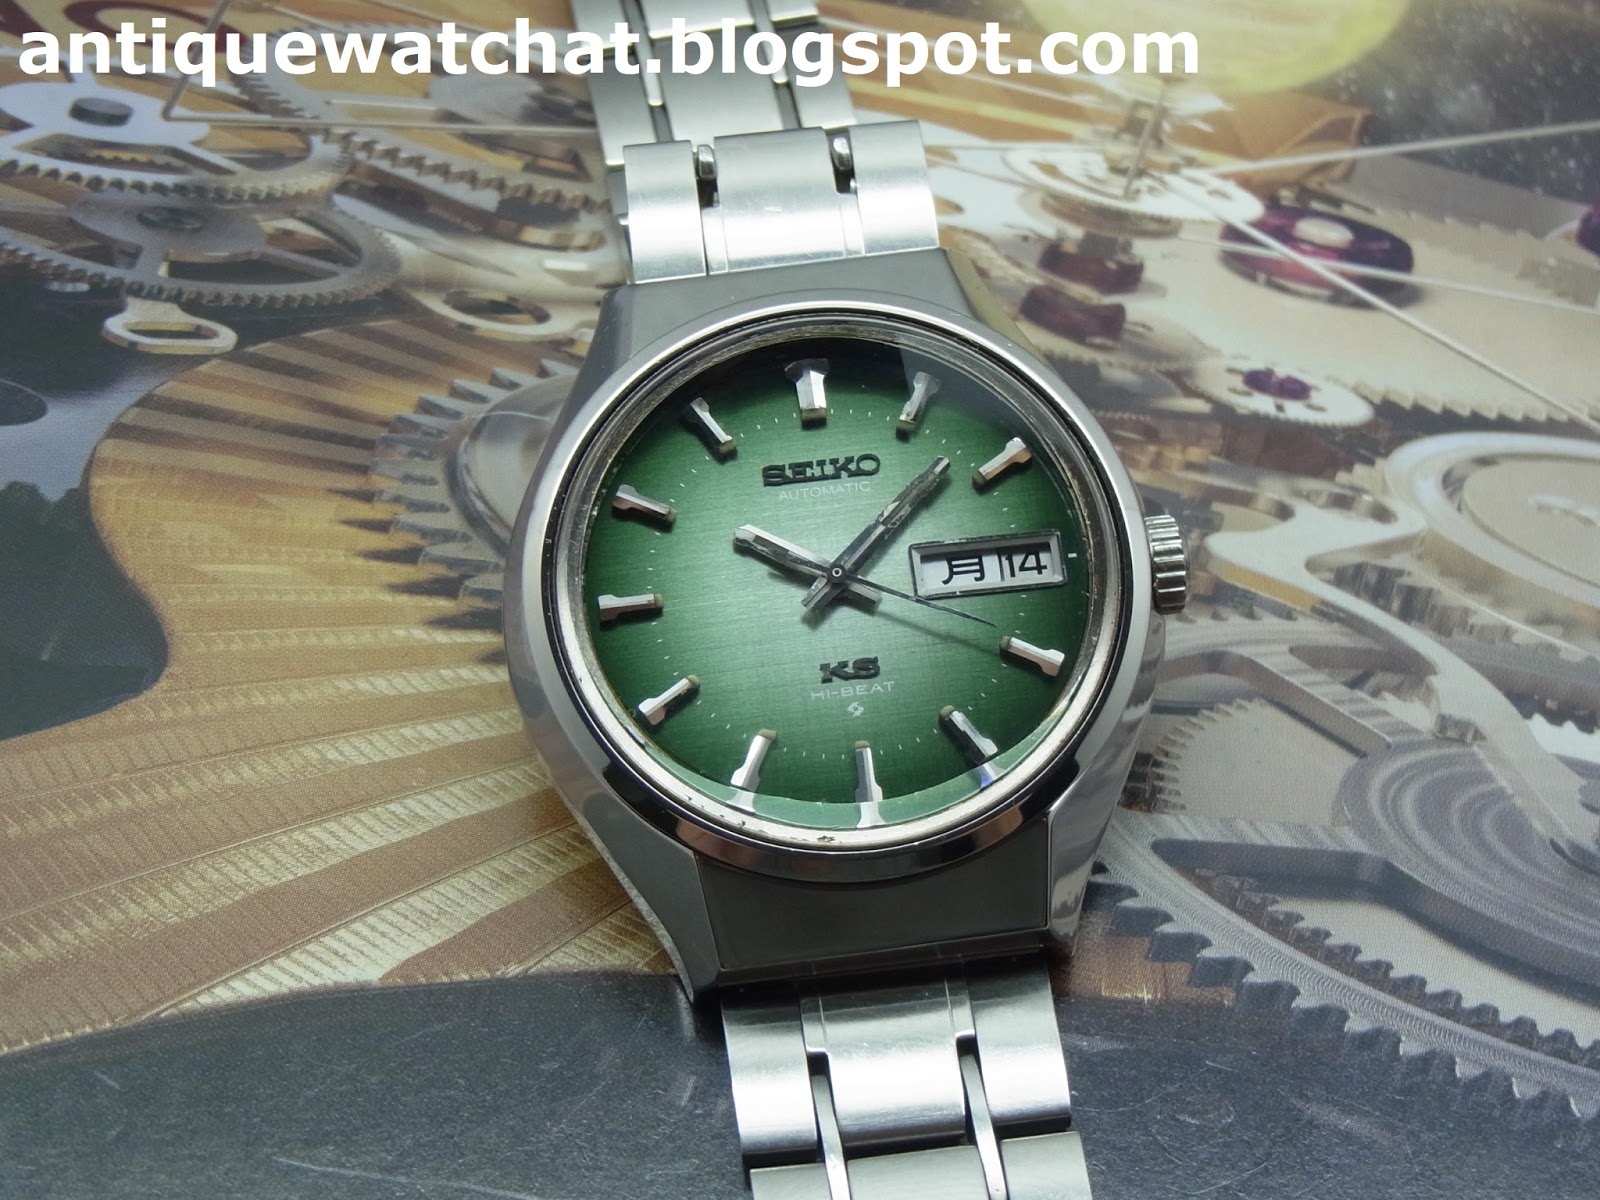 Antique Watch Bar: KING SEIKO HI-BEAT 25 JEWELS 5626-7200 AUTOMATIC KS243  (SOLD)